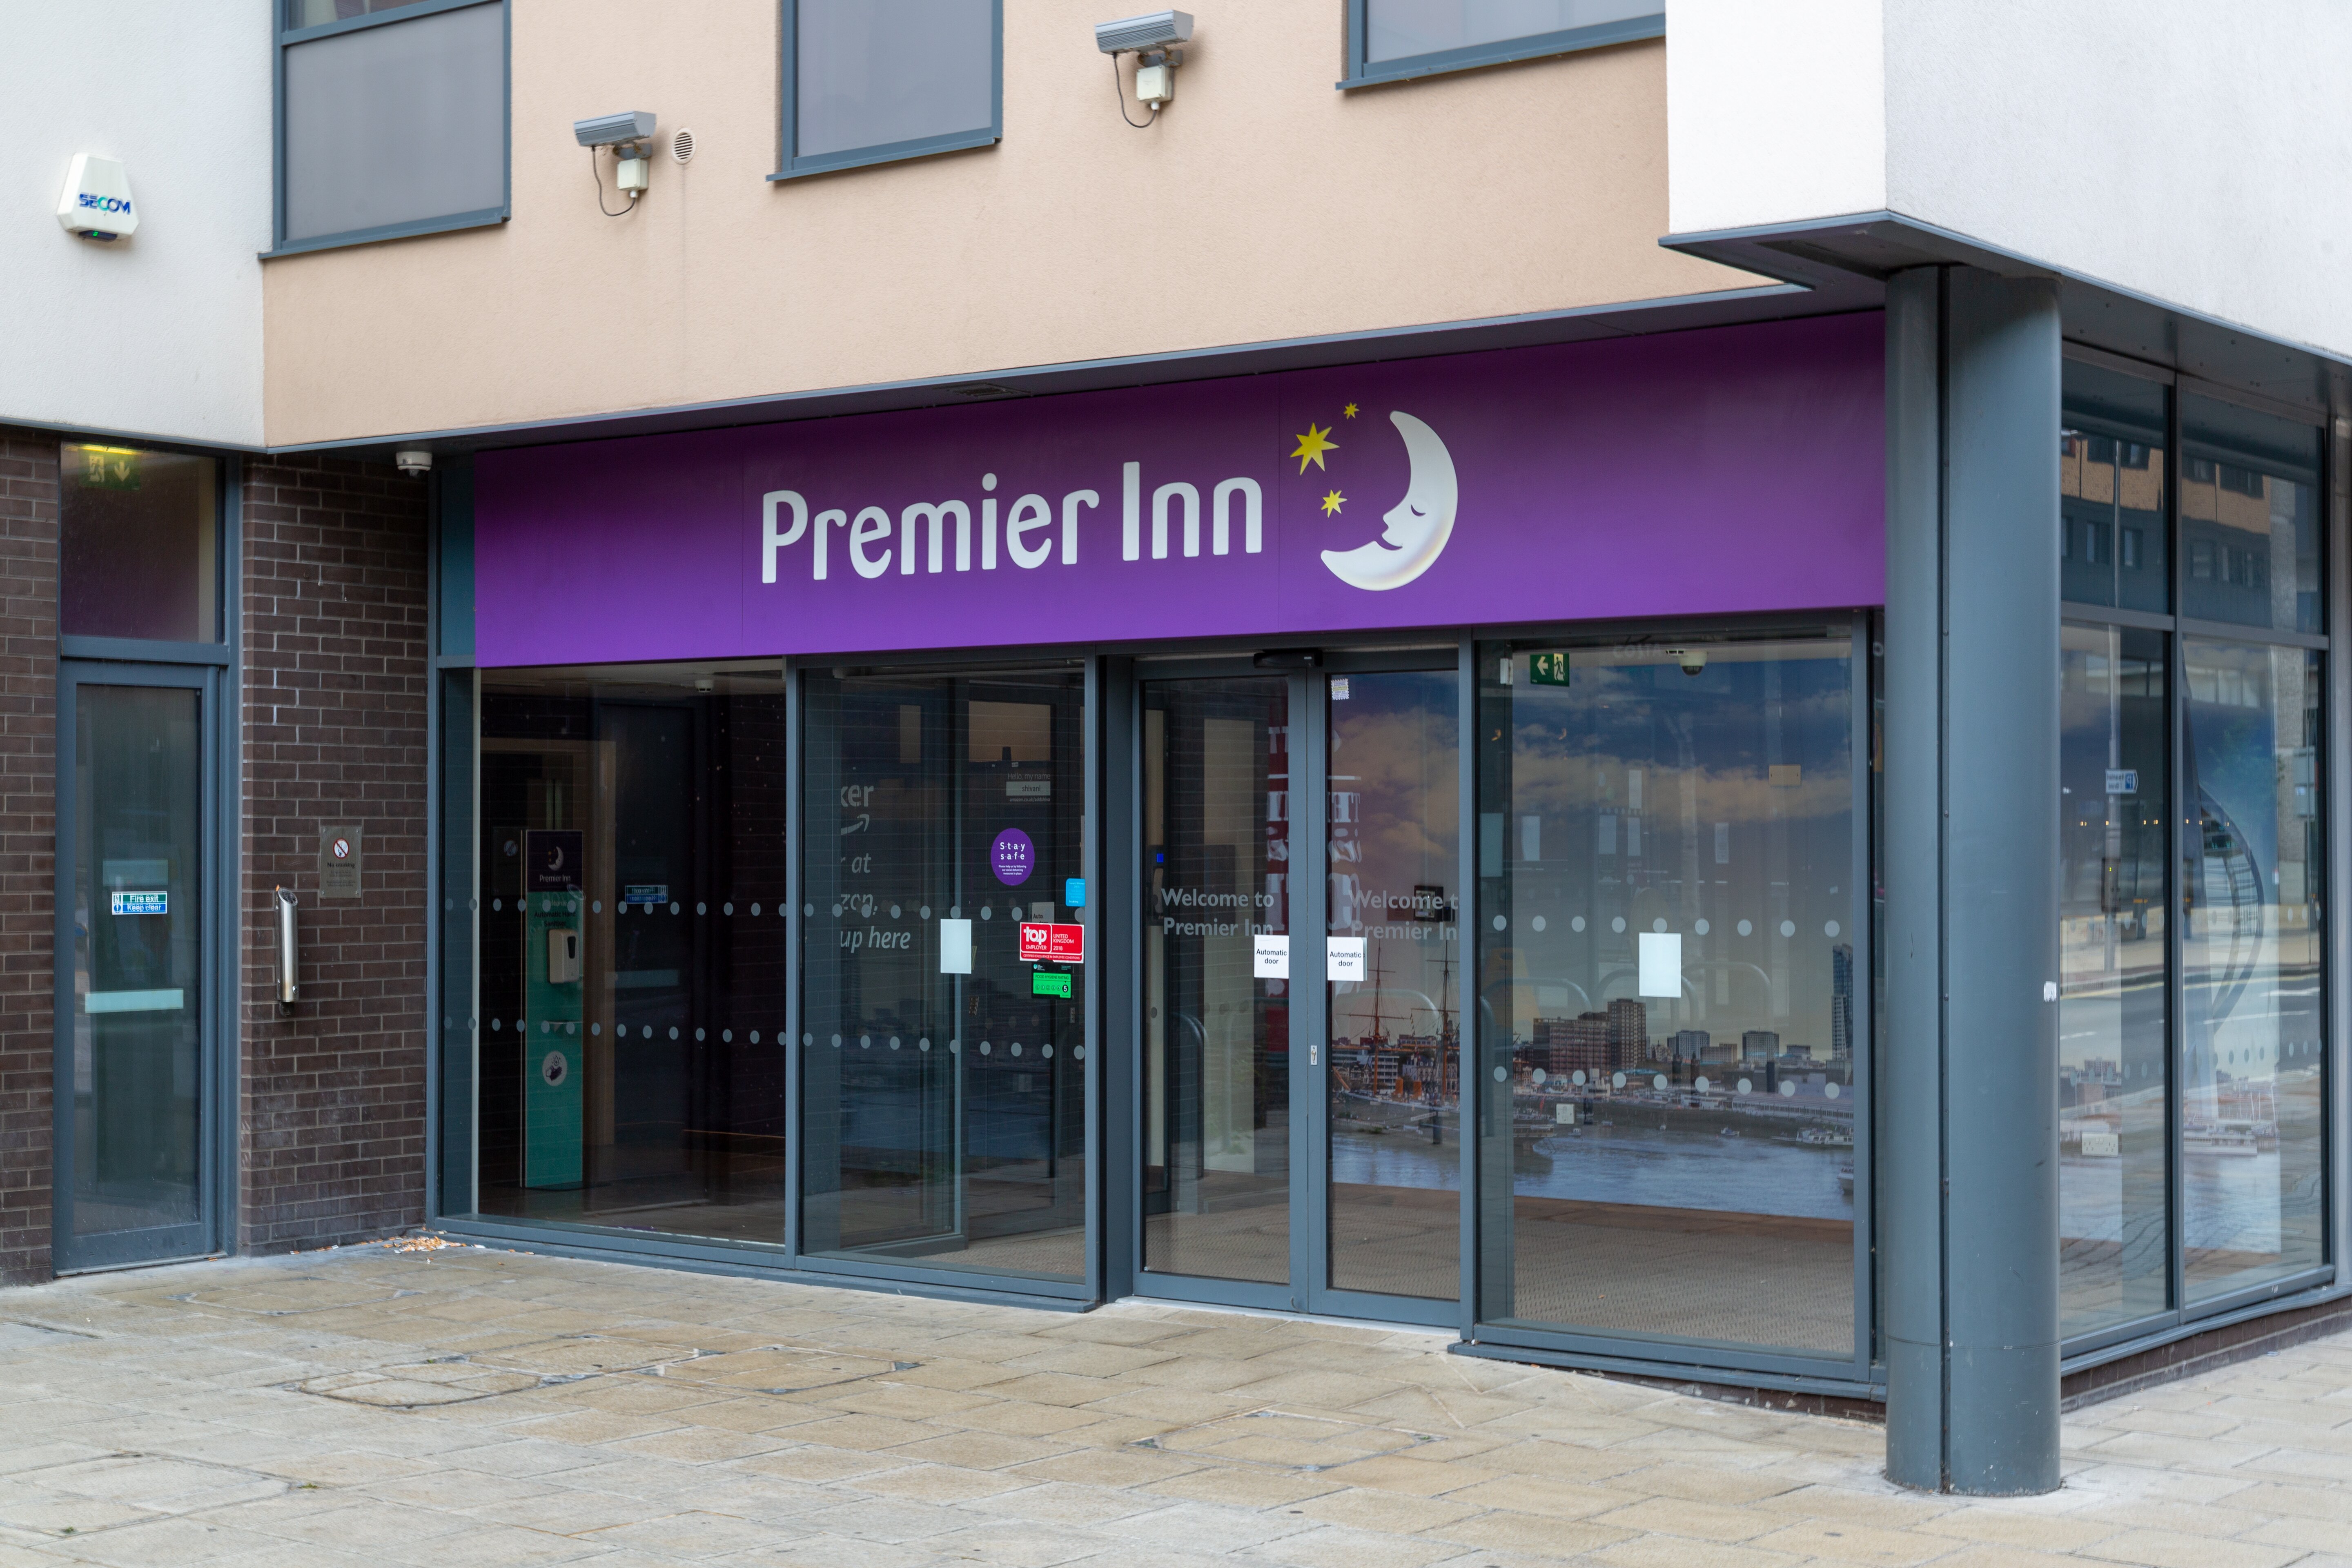 Premier Inn owner Whitbread to cut 6,000 jobs following sales decline